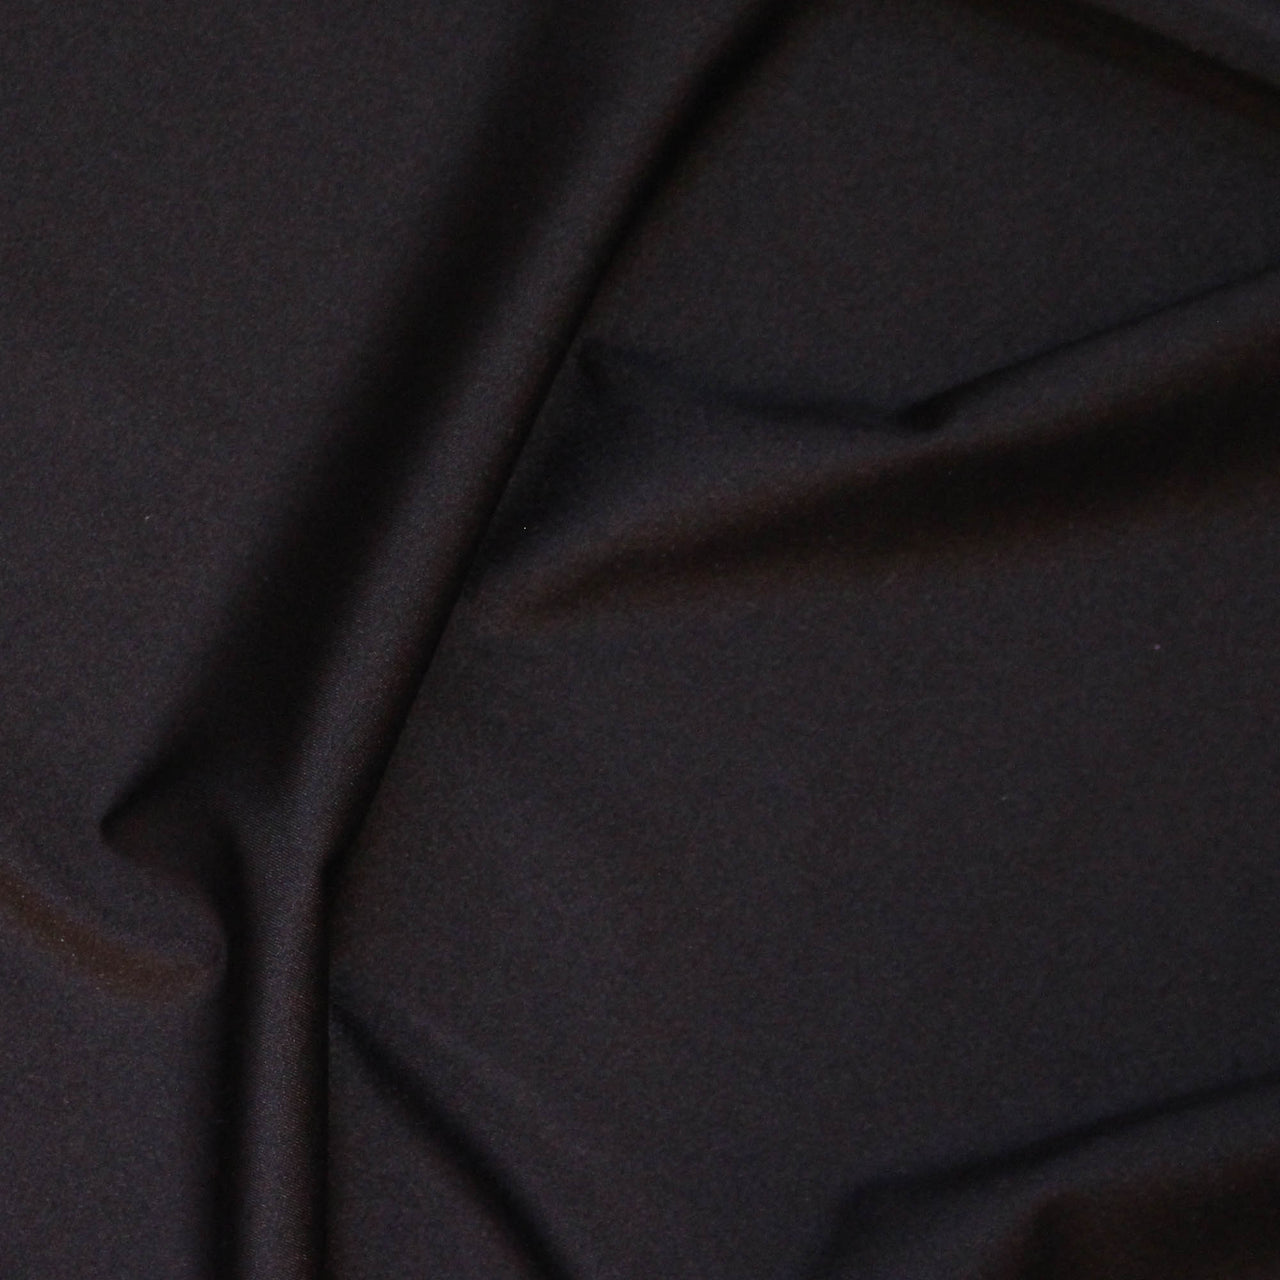 Black - Nylon Spandex Fabric - 4 Way All Way Stretch Superior Quality - Leotards, Dancewear